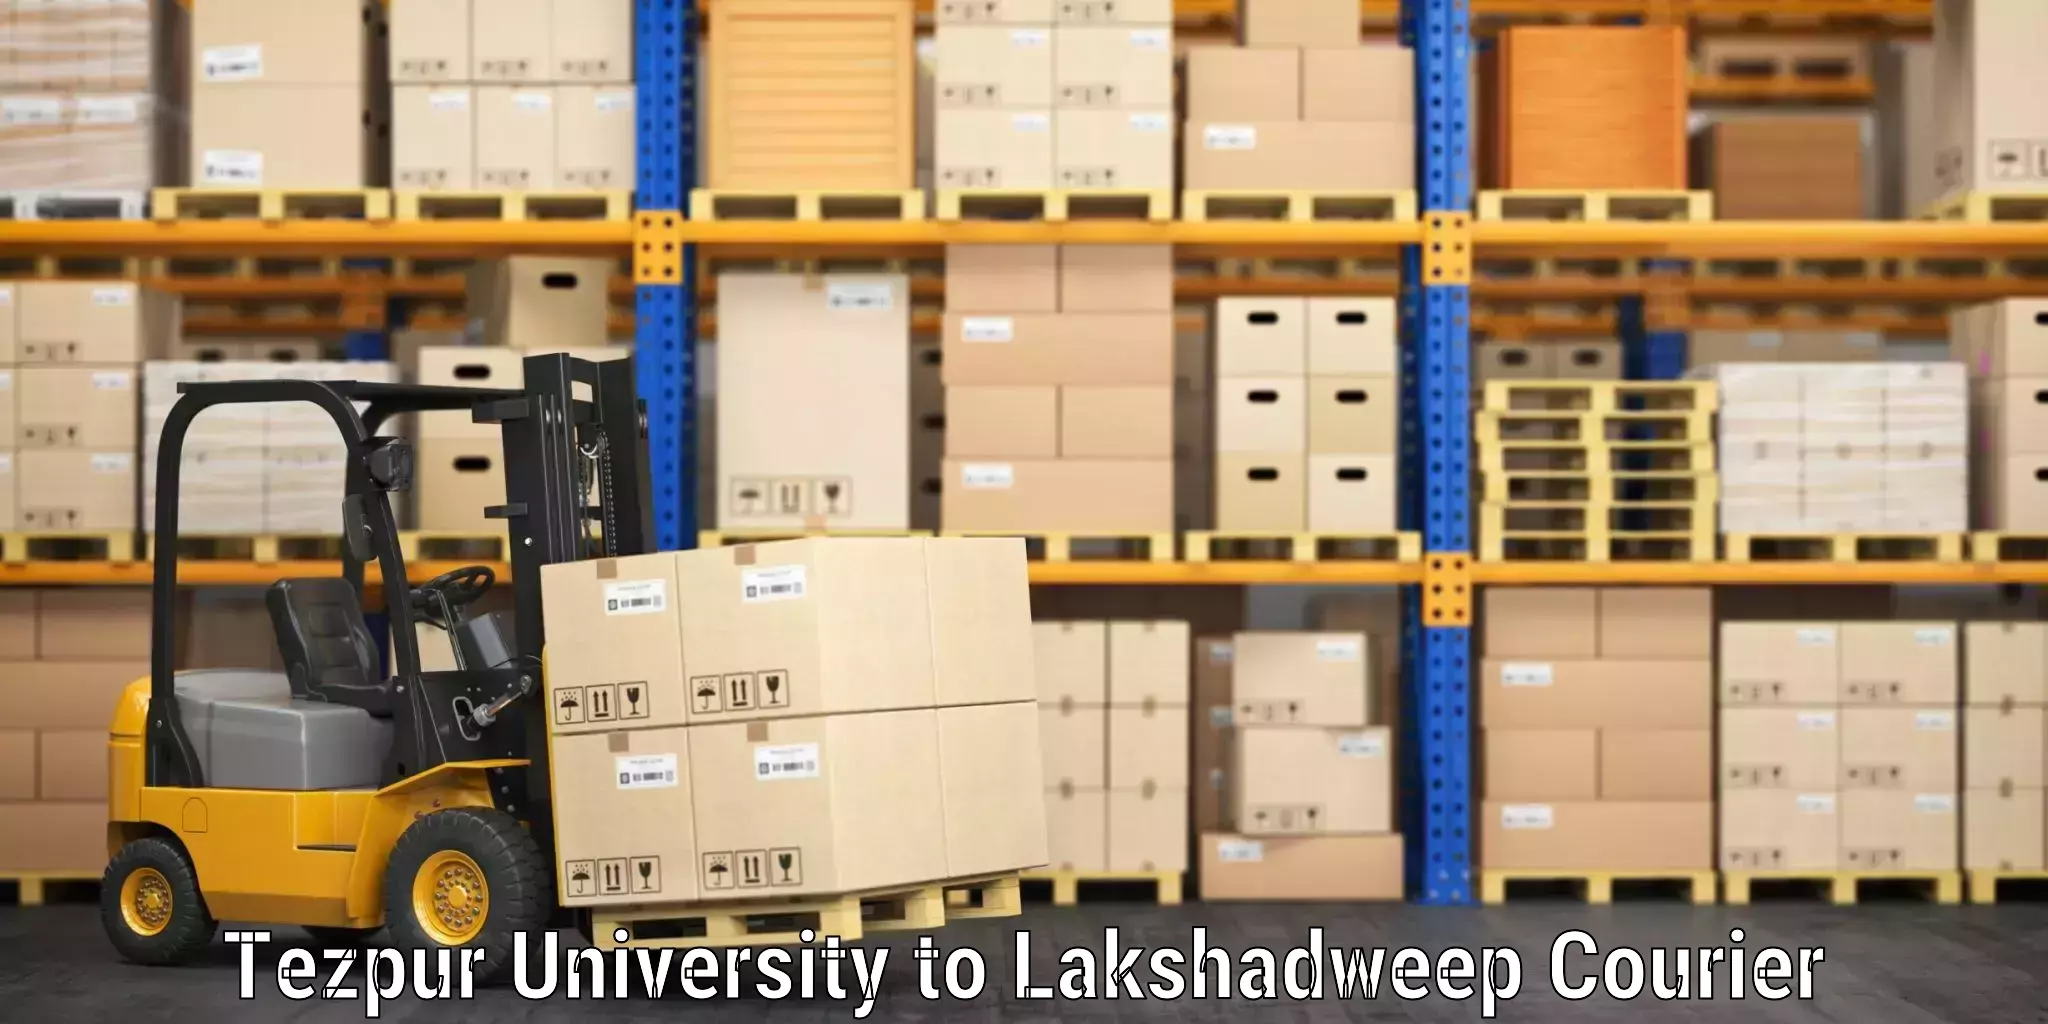 Unaccompanied luggage service Tezpur University to Lakshadweep